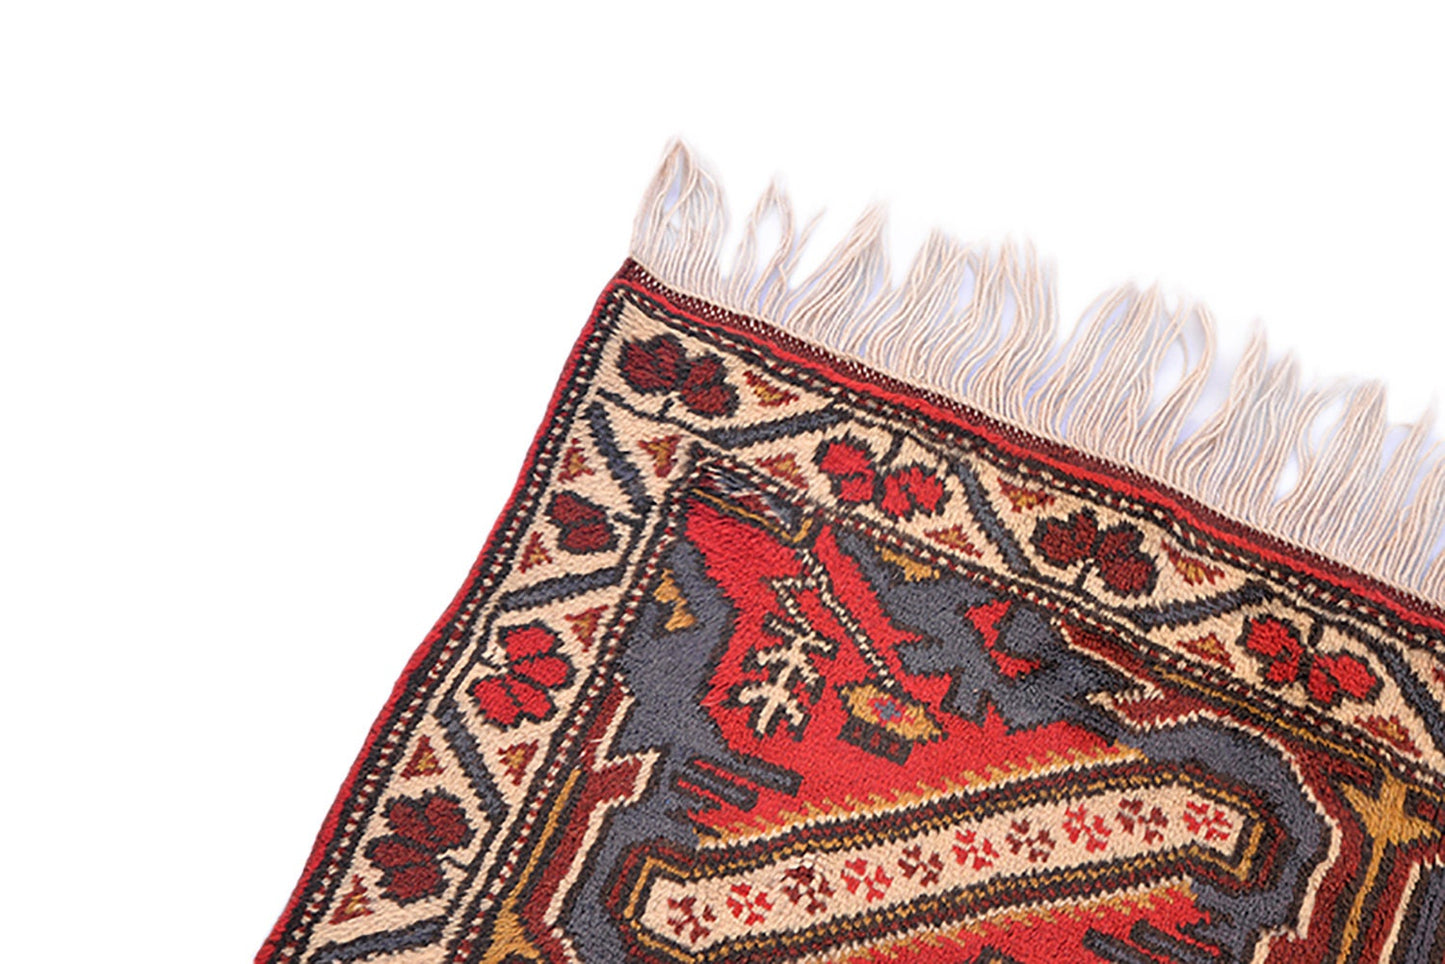 Tribal Kazak Red Blue Rug | 3x6 RunnerRug | Geometric Pattern Rug | Kitchen Accent Wool Hand Knotted Rug